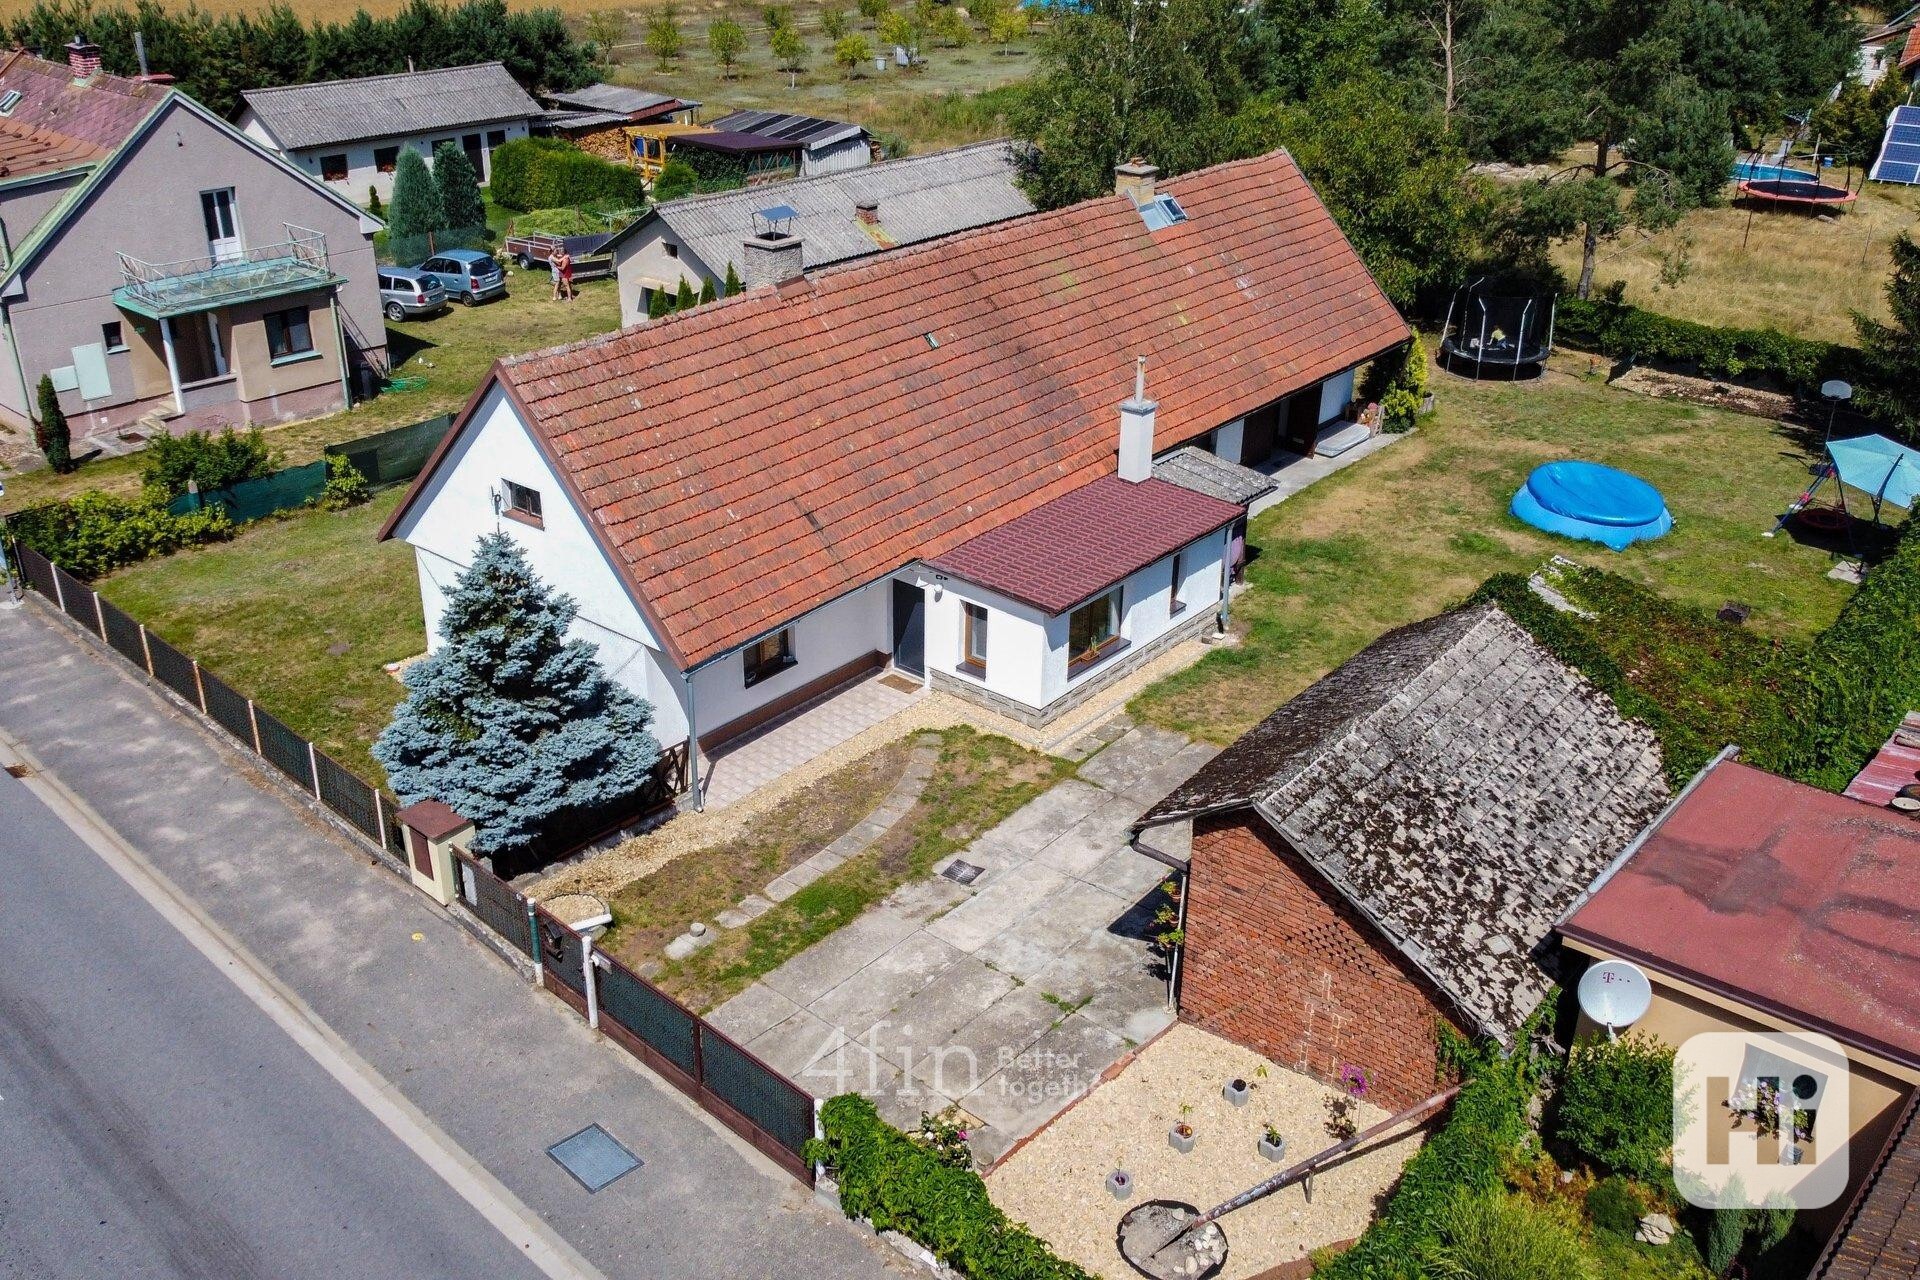 Prodej rodinného domu 130 m2, zahrada 500 m2, Čermná nad Orlicí - foto 15